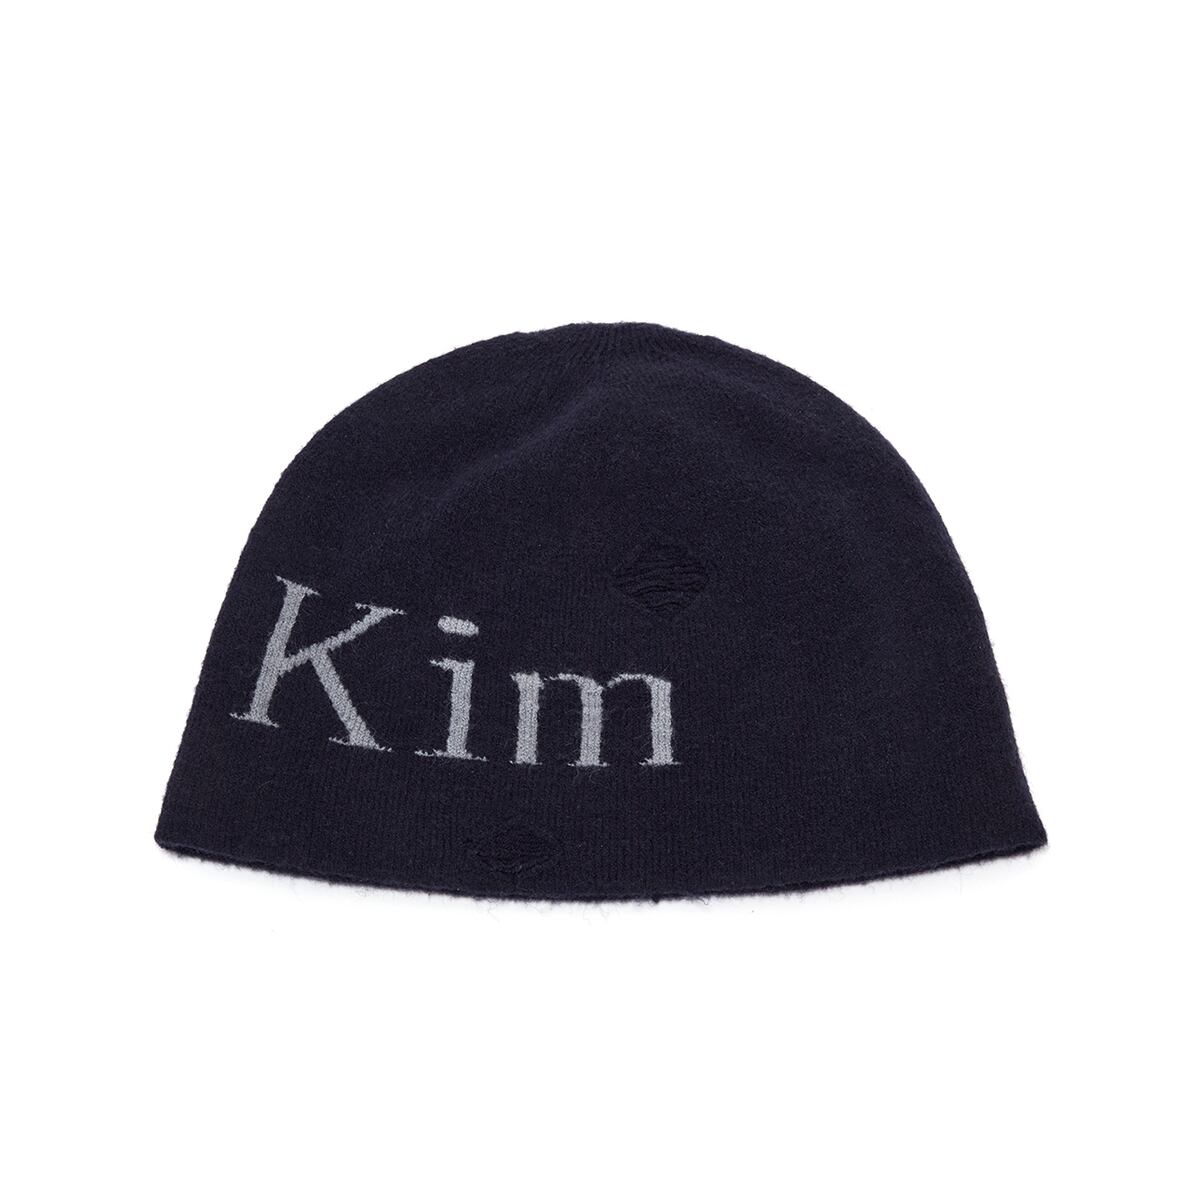 Matin Kim LOGO VINTAGE SHORT BEANIE WBMH134 マーティンキム ビーニー ニット帽 帽子 韓国ブランド